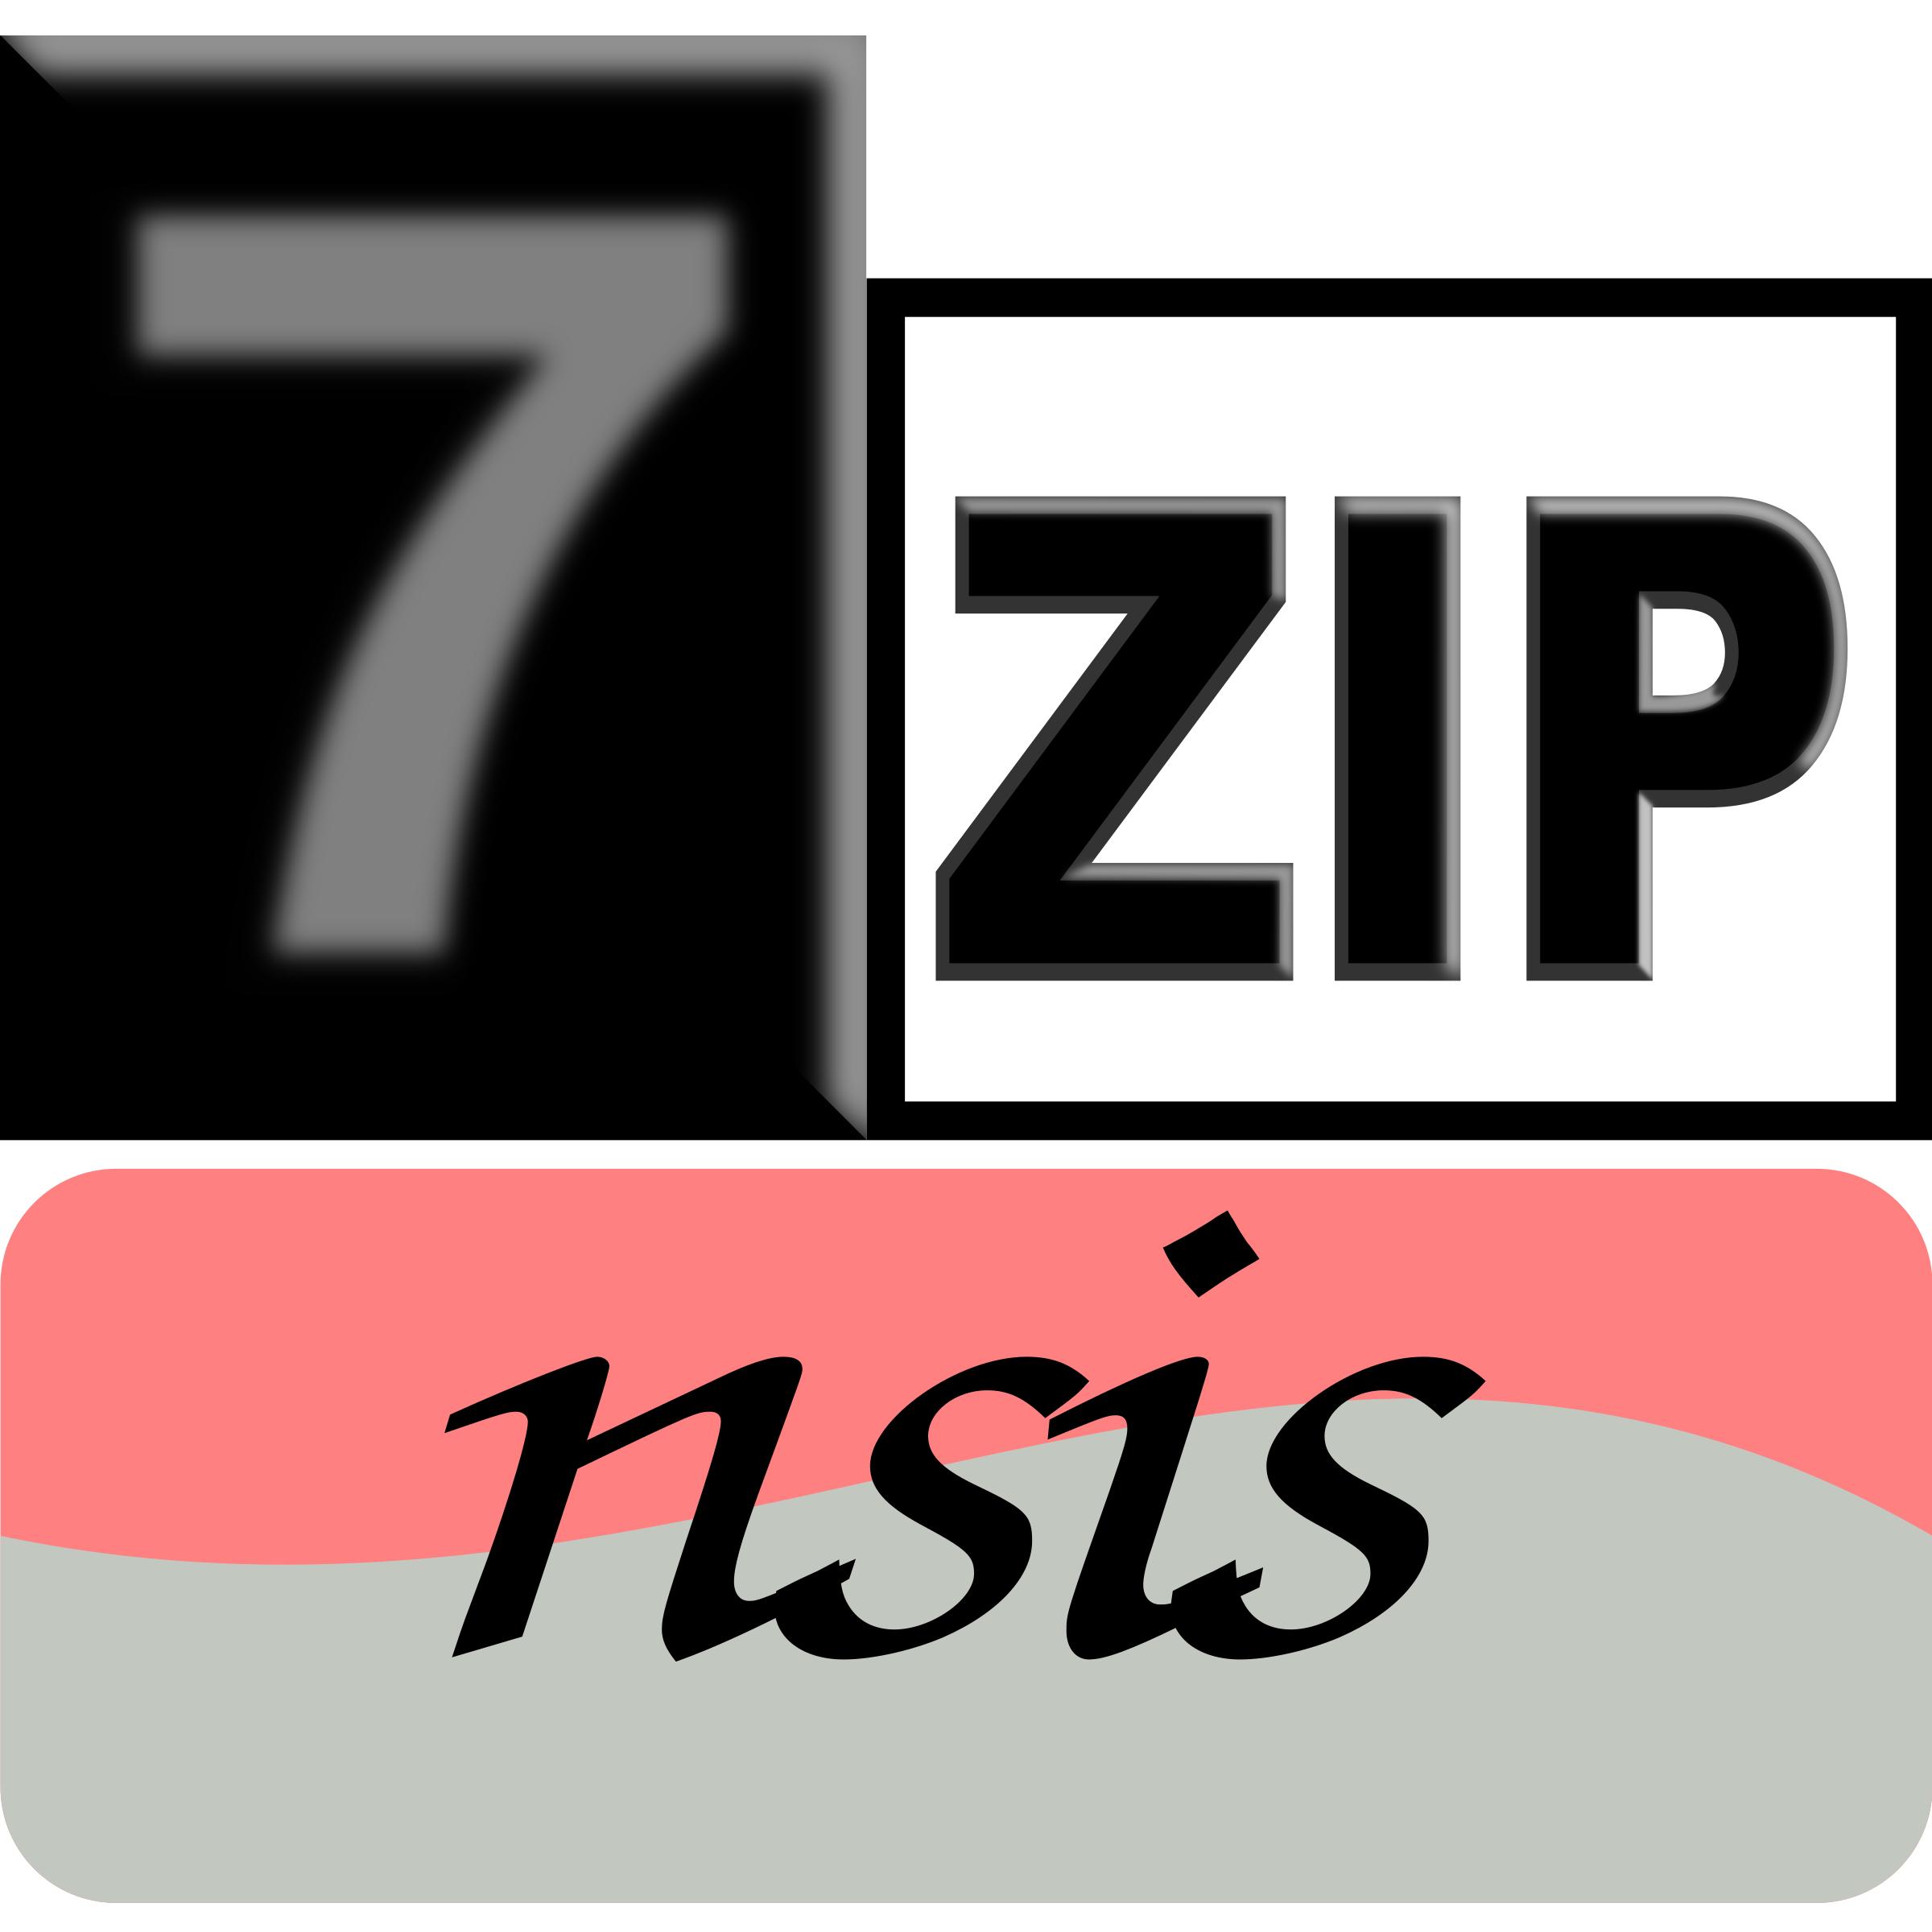 7zipClassic-nsis png